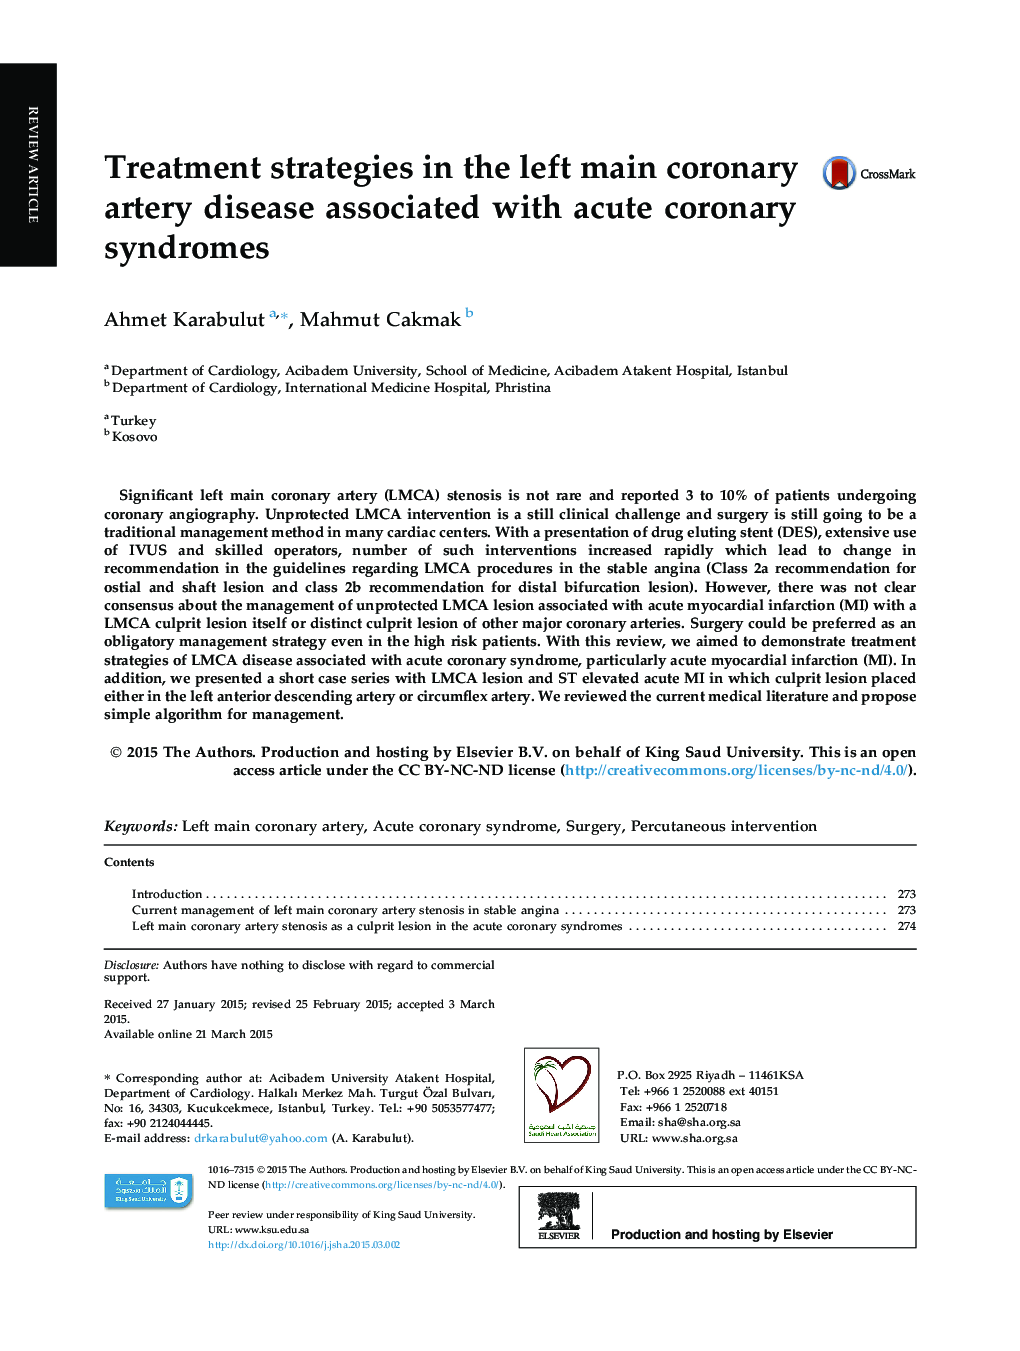 Treatment strategies in the left main coronary artery disease associated with acute coronary syndromes